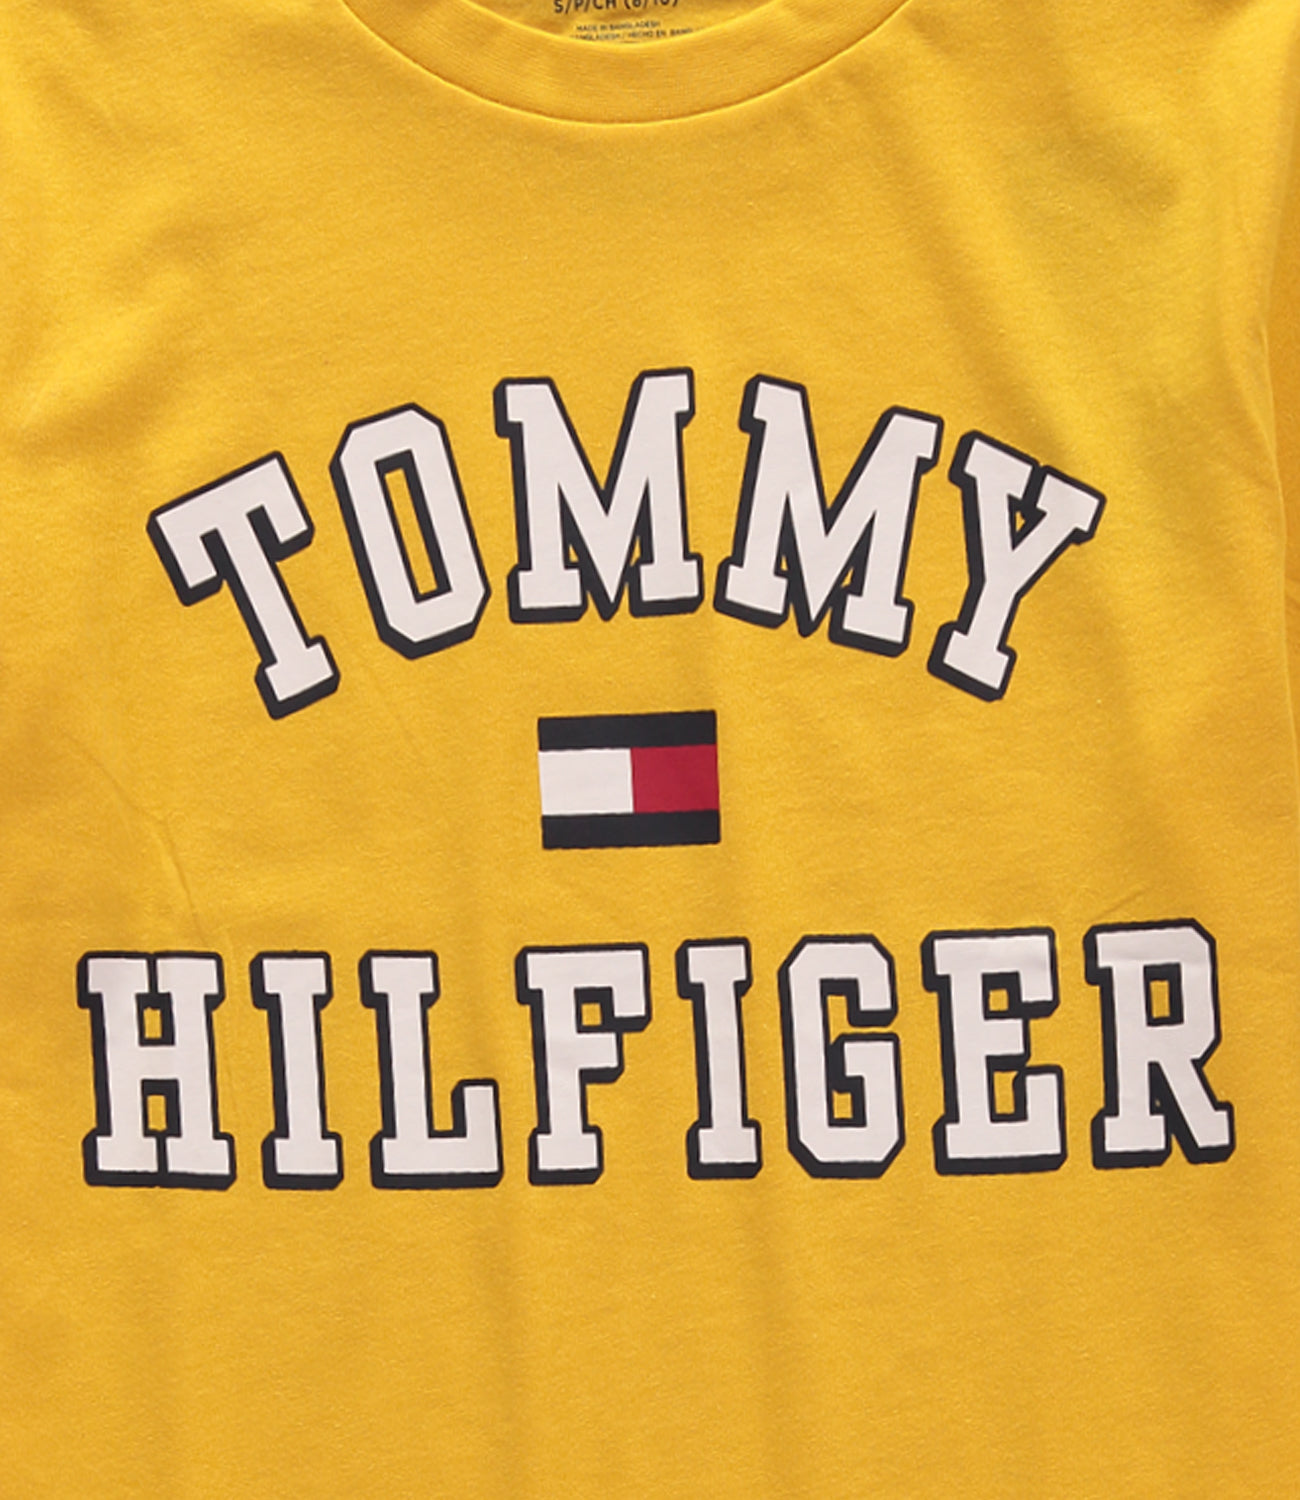 Tommy Hilfiger Boys 4-7 Tommy Varsity T-Shirt